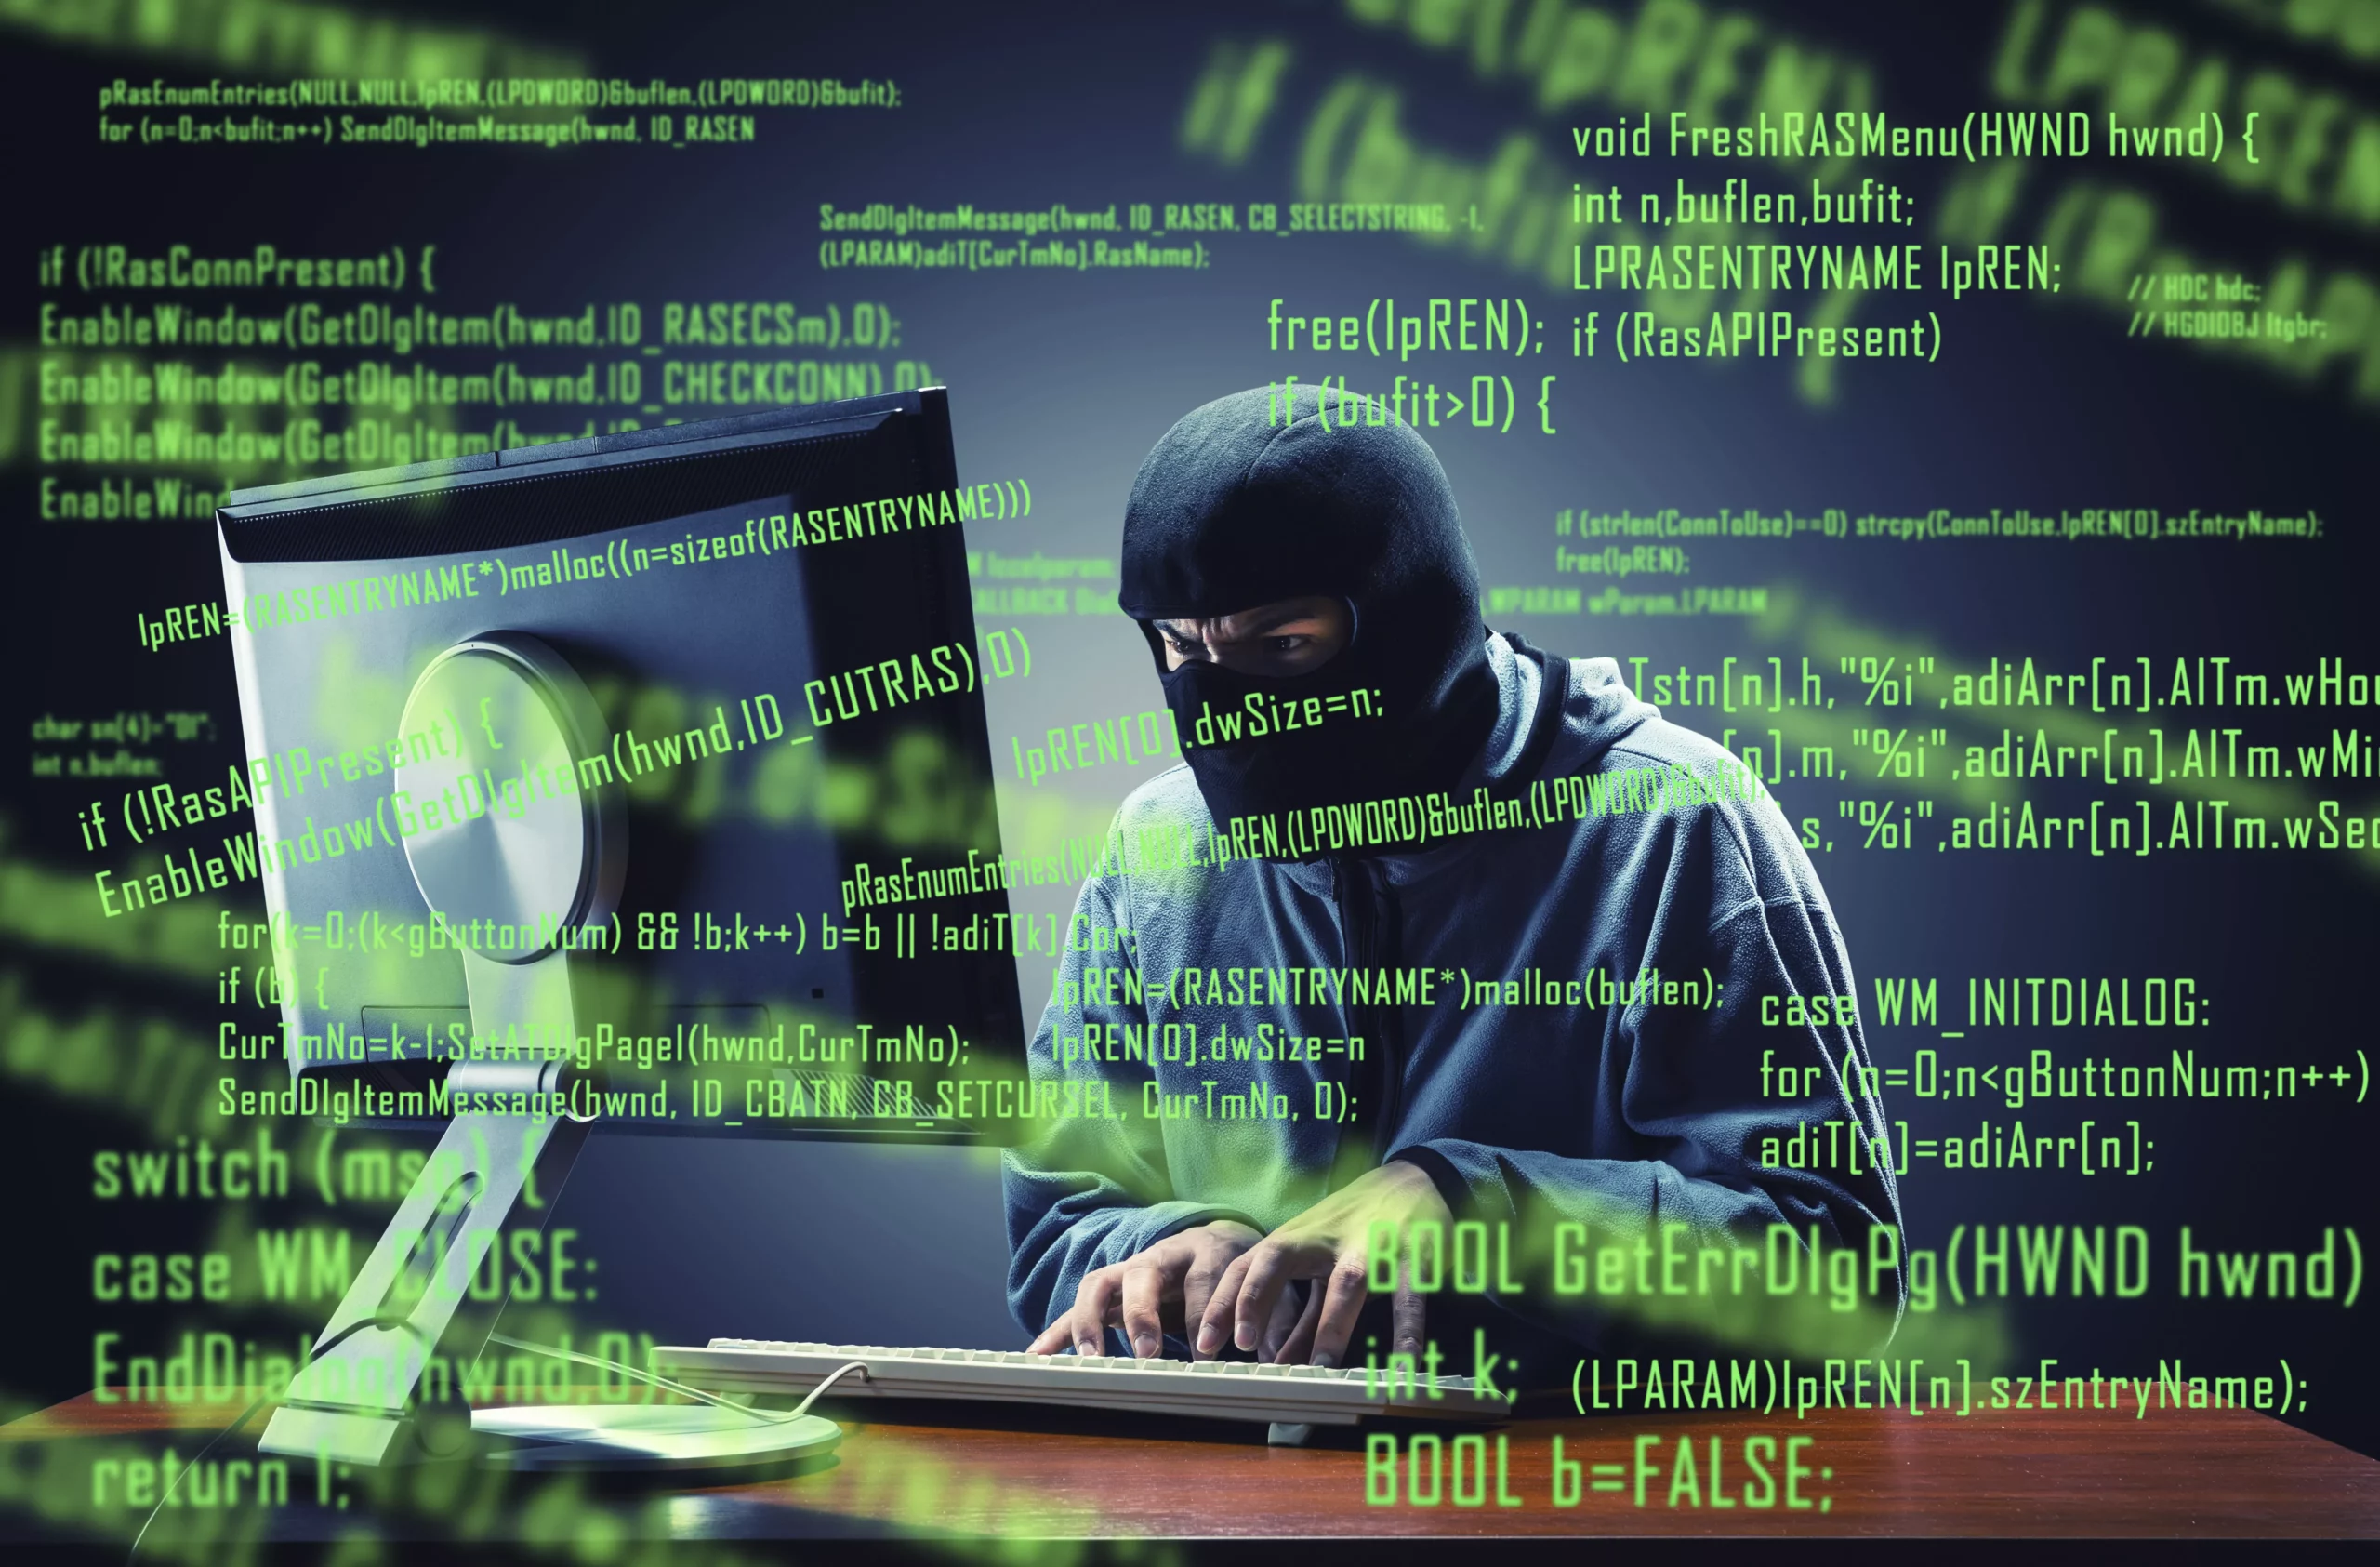 Persona con capucha frente a computador, ataques de ransomware se multiplican por diez en 2021